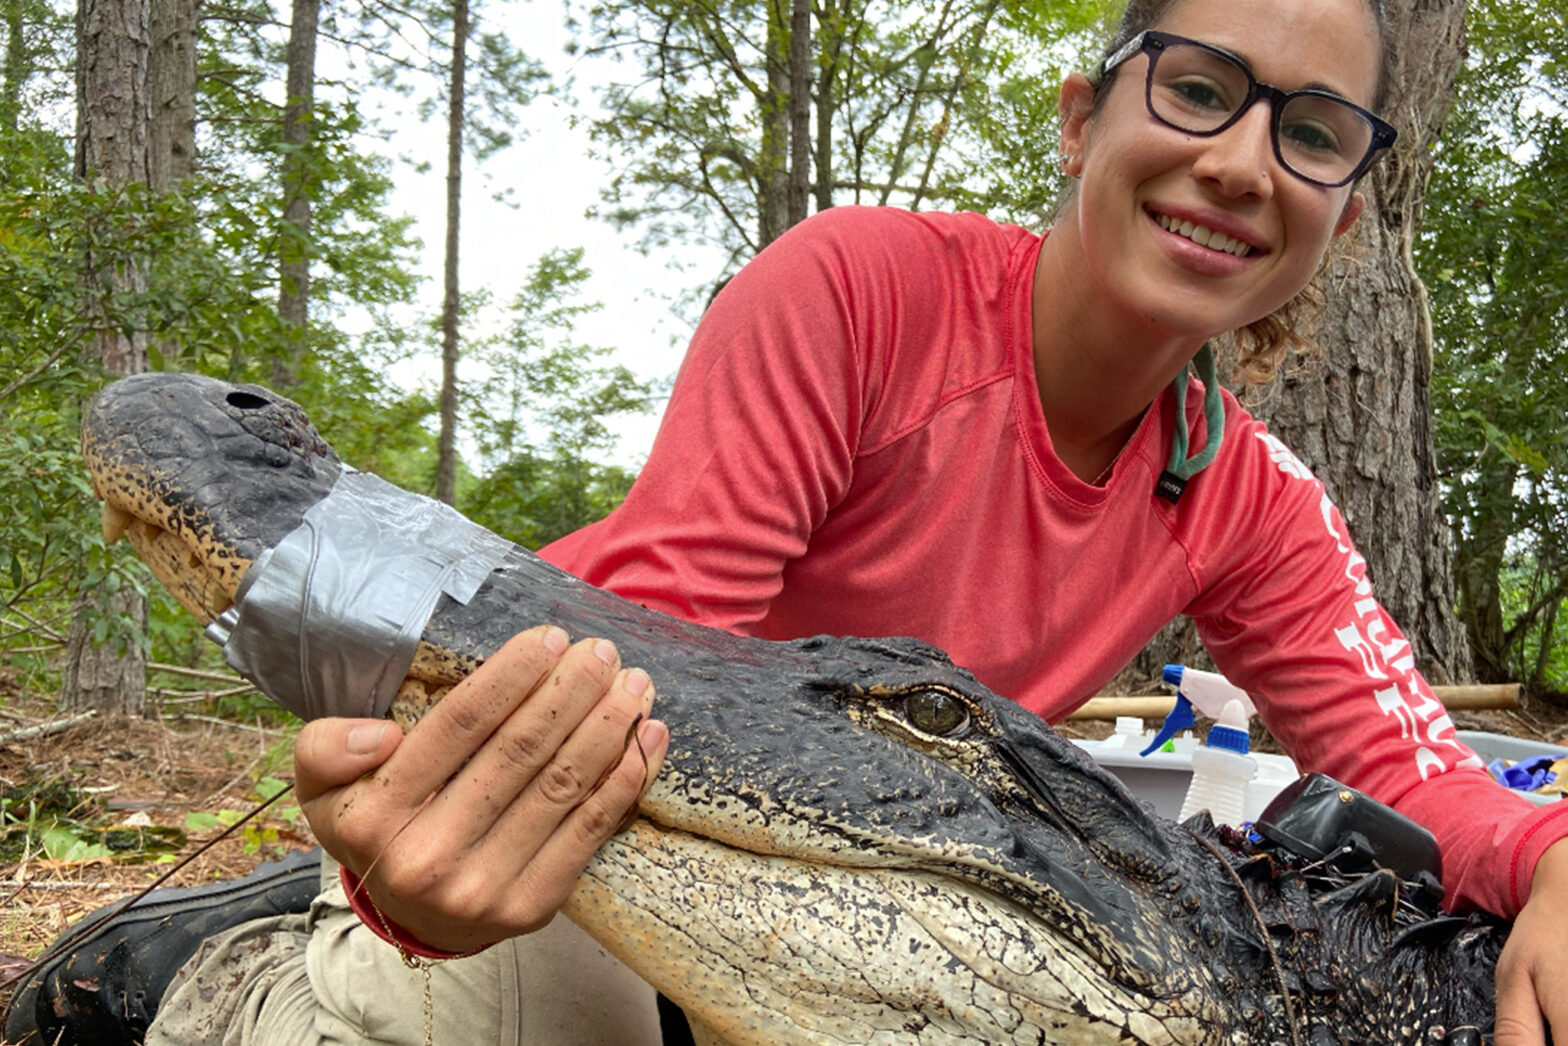 Laura Kojima holding an alligator.